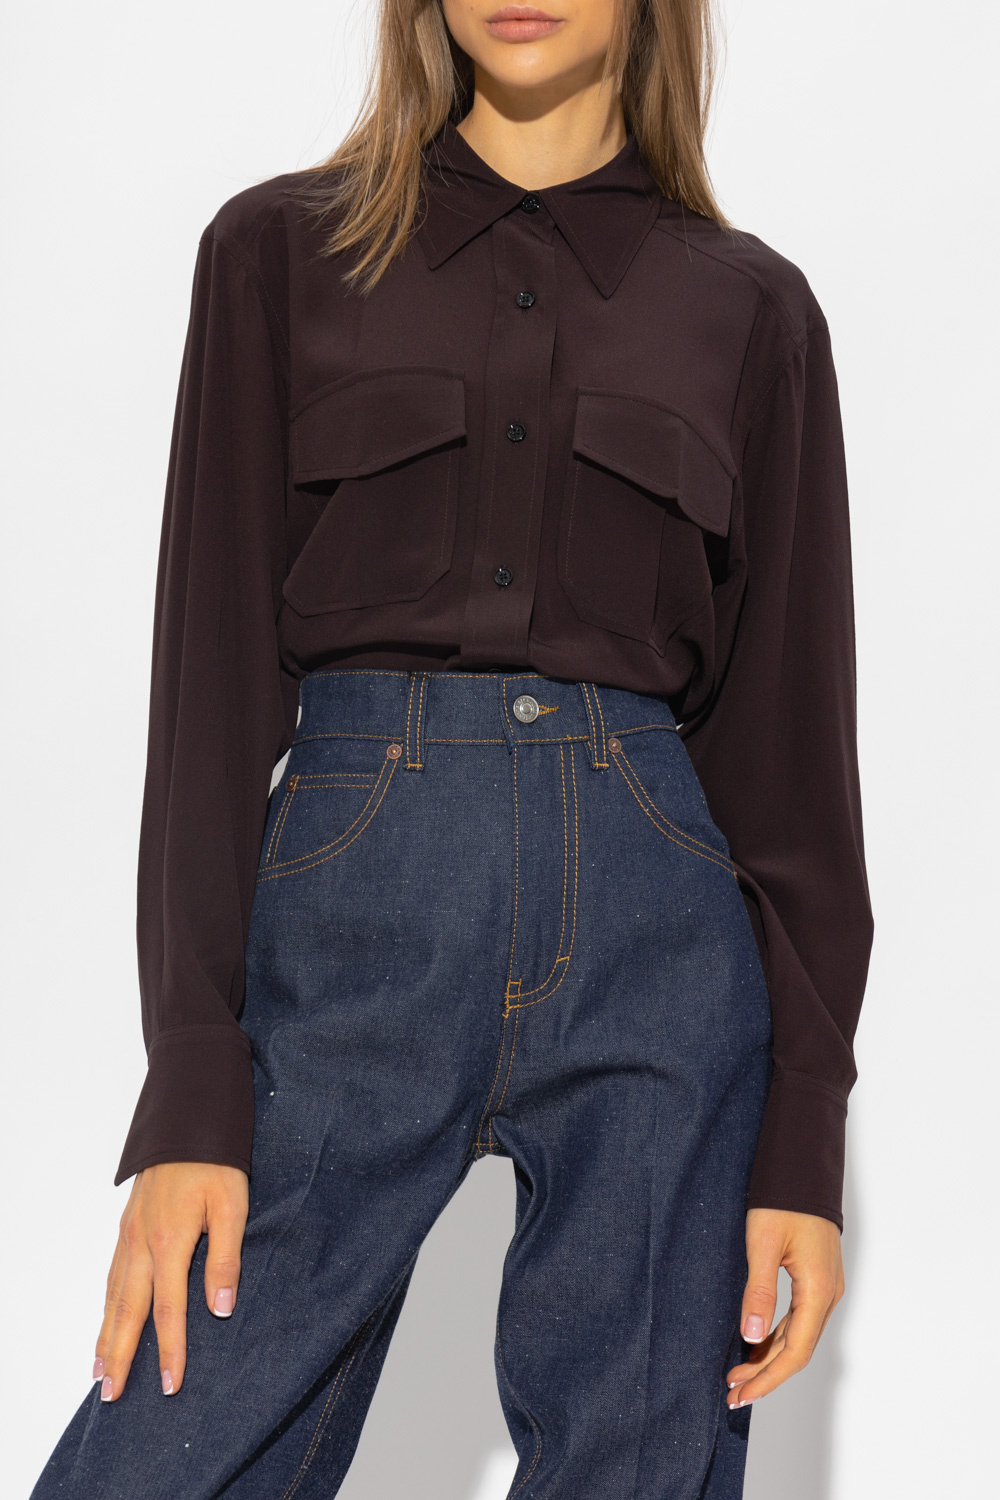 Victoria Beckham Silk shirt sommer with pockets